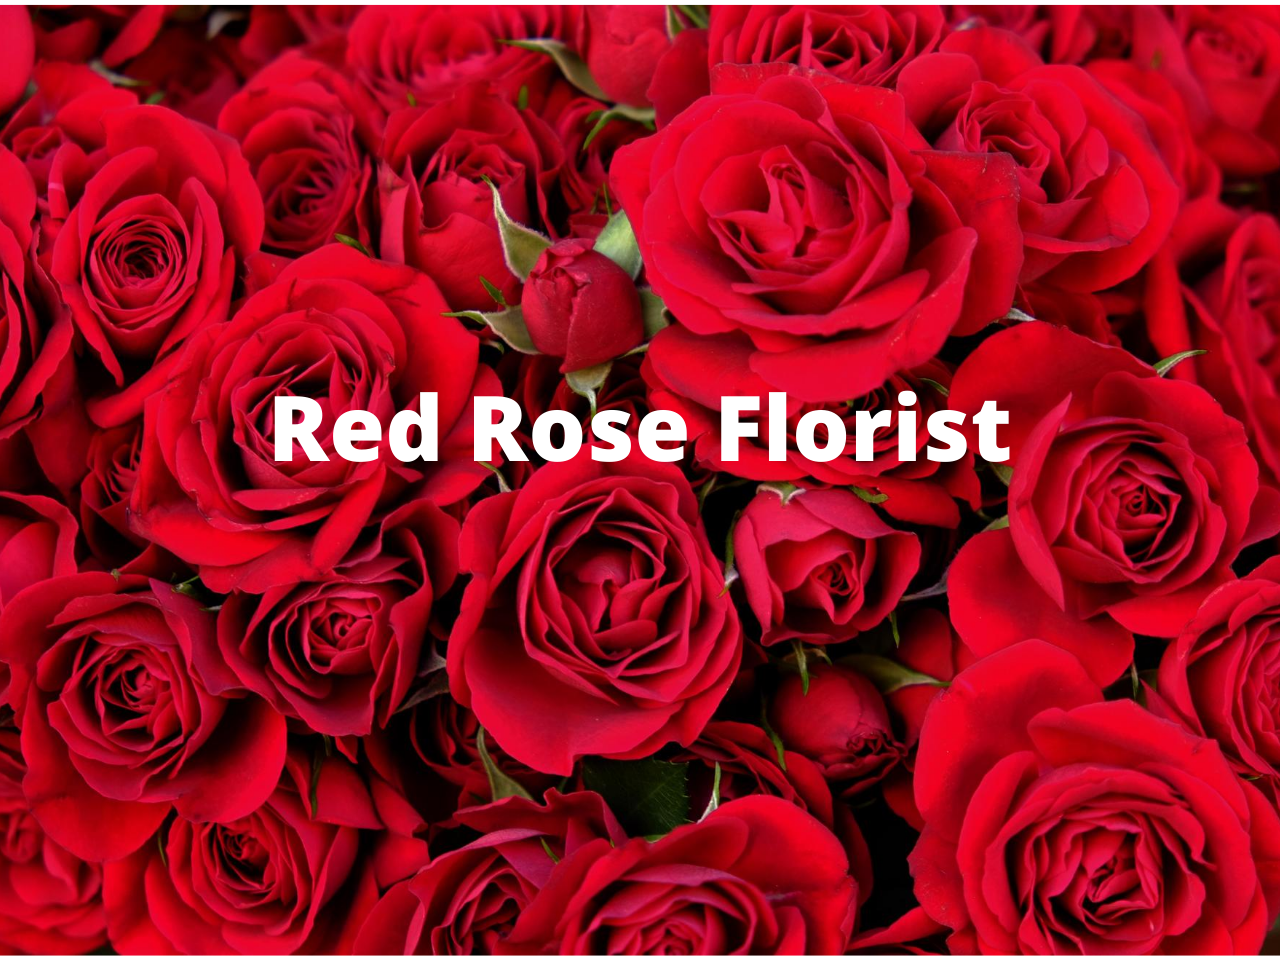 Red Rose Florist